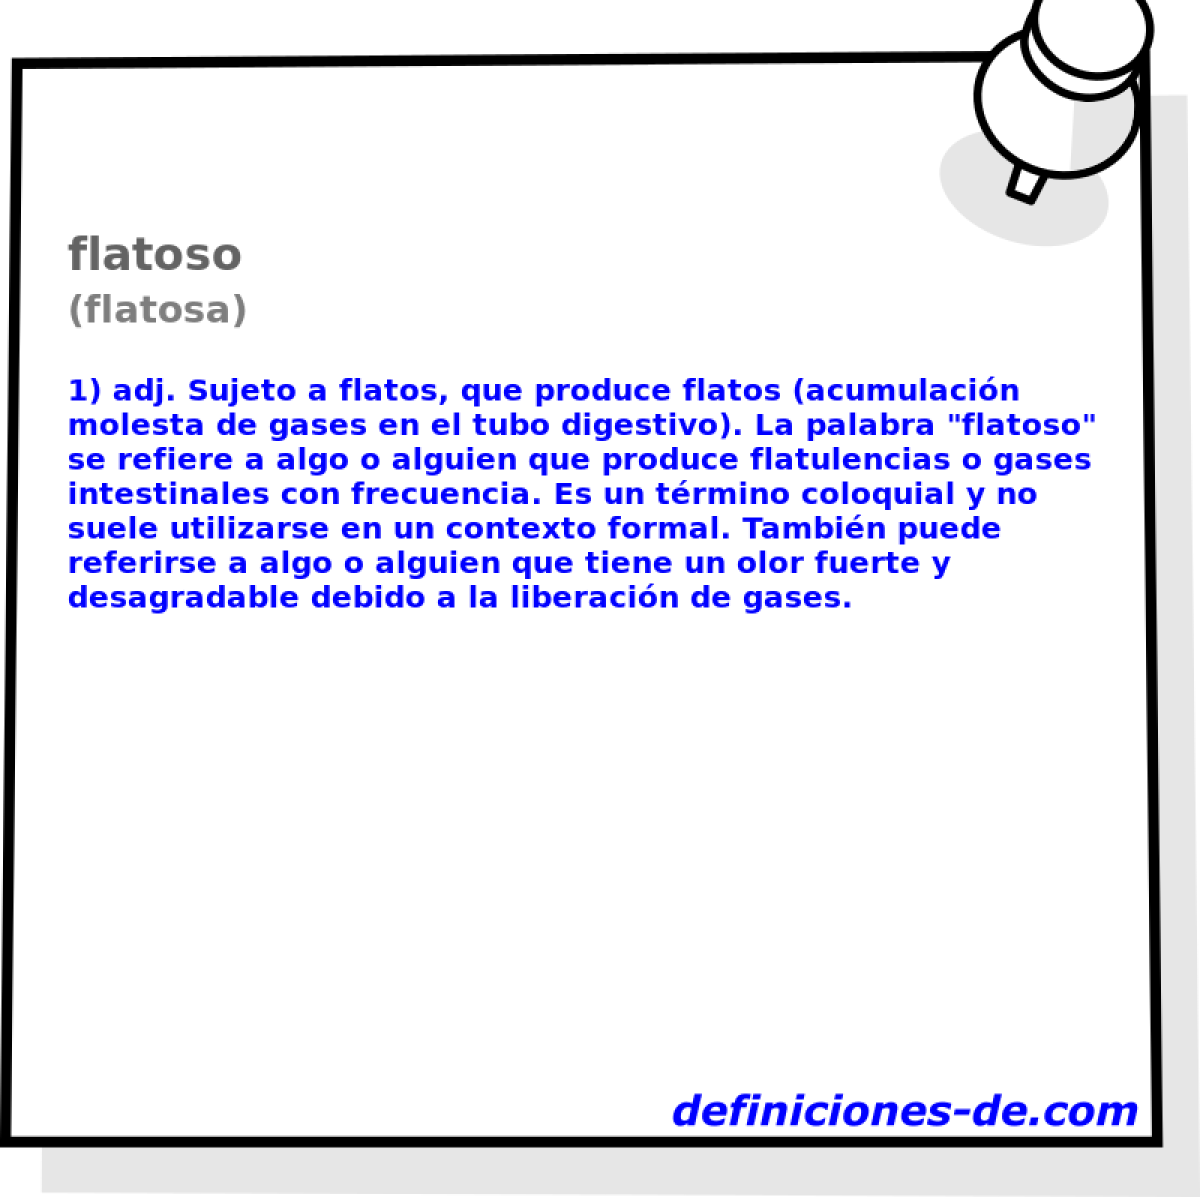 flatoso (flatosa)